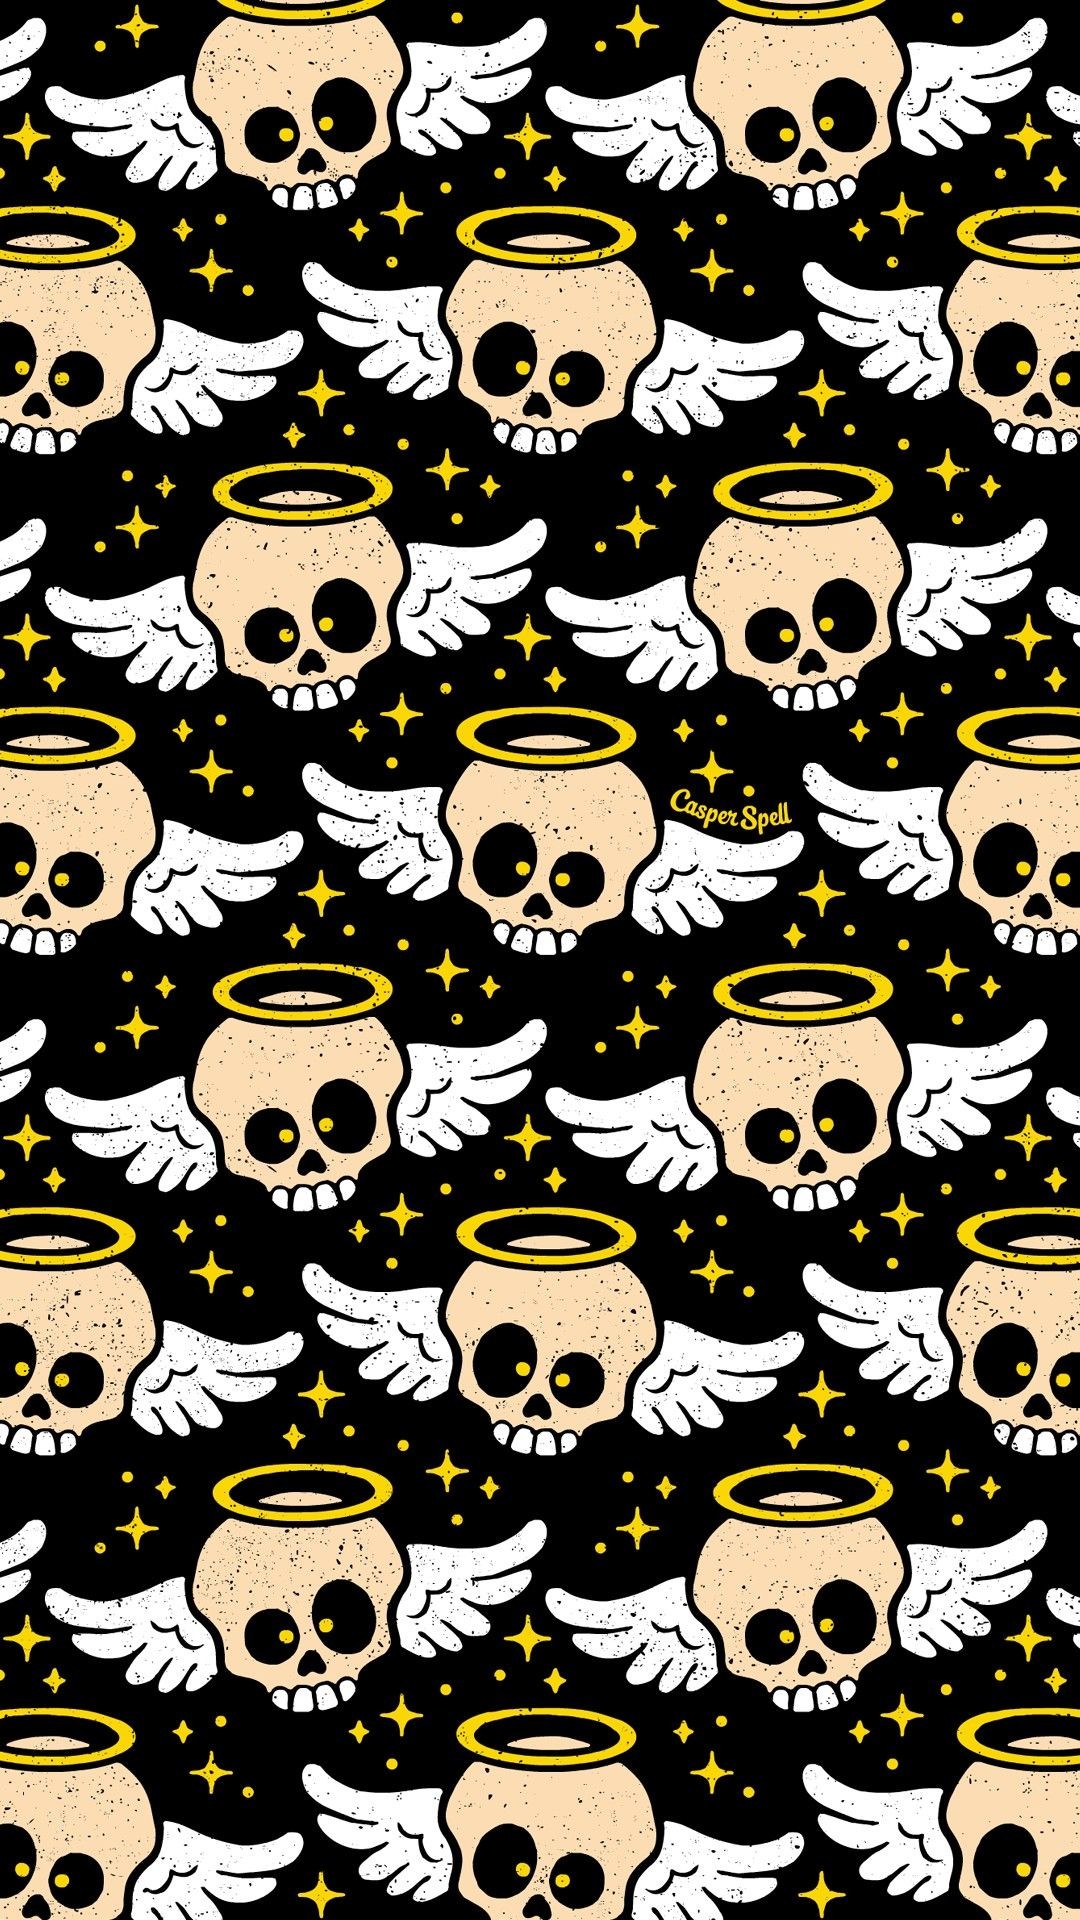 1080x Angel Skull Skulls Macabre Spooky Creepy Scary Halloween Background